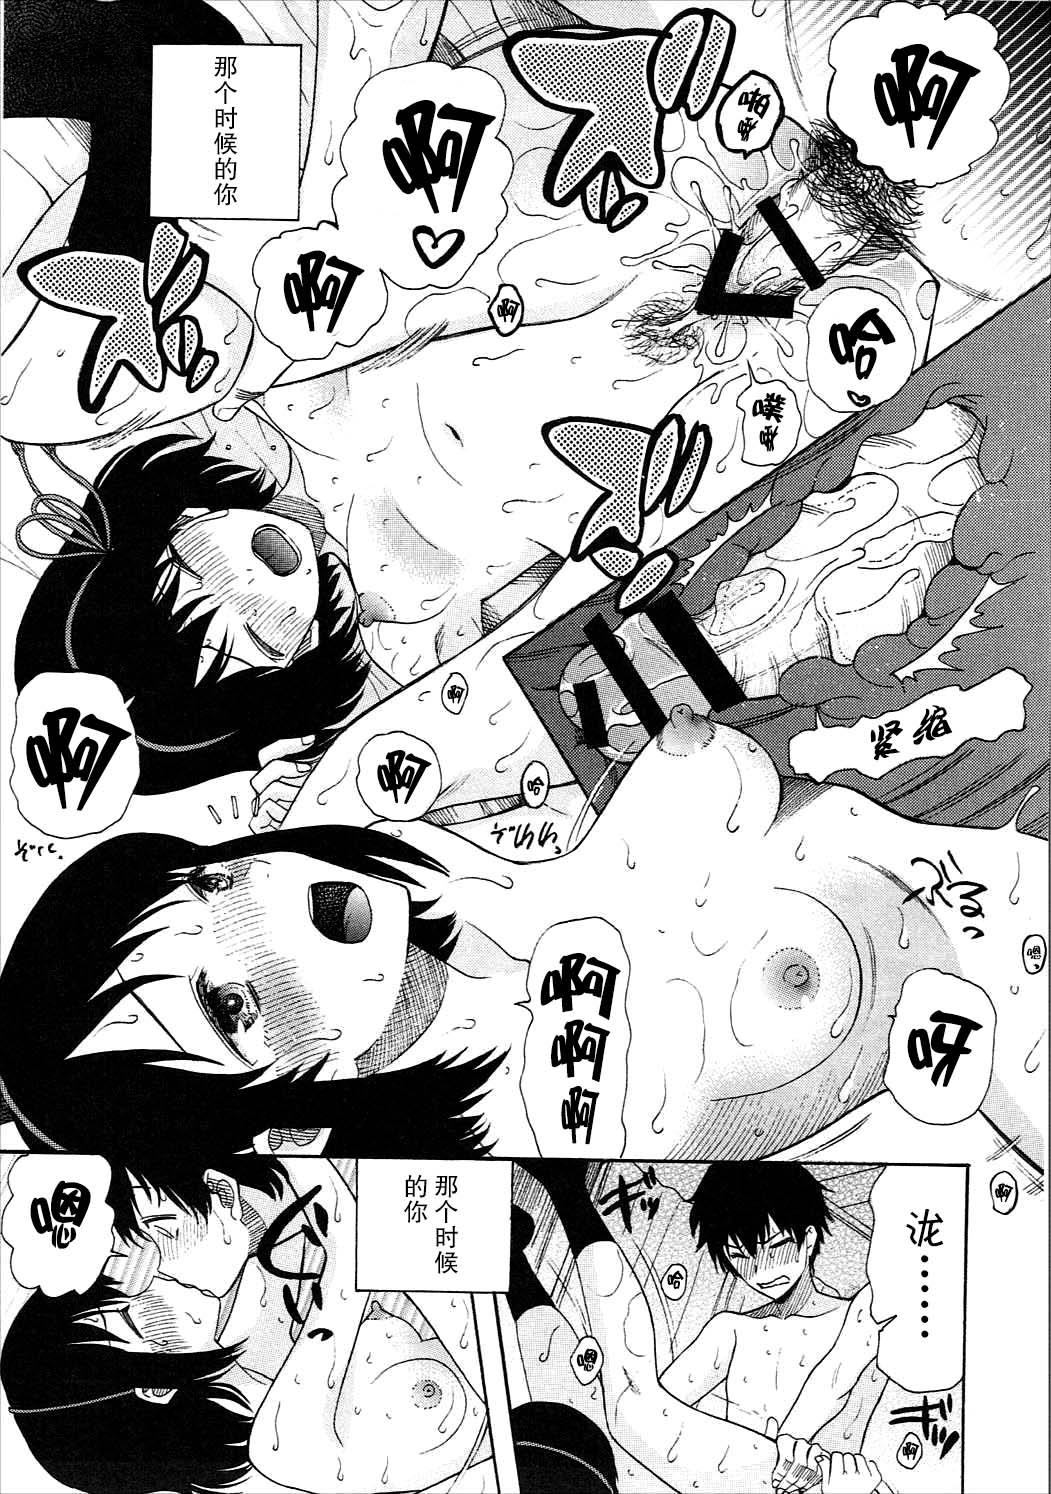 Mistress Futari no Hibi o. - Kimi no na wa. Hardcore Fucking - Page 12